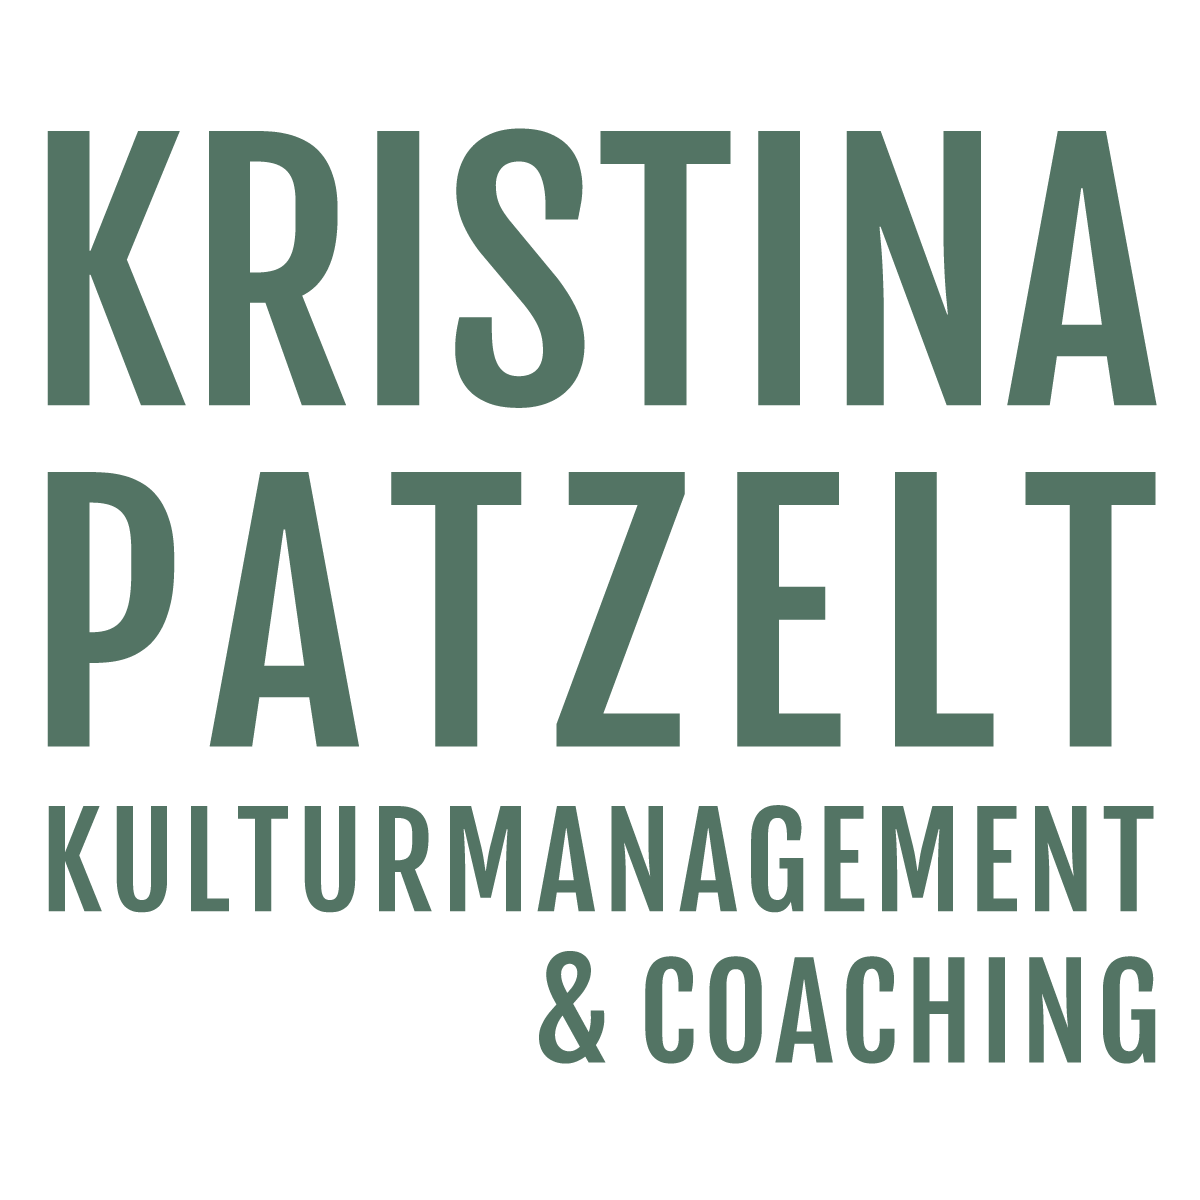 Kristina Patzelt (KP) - Kulturmanagement & Coaching